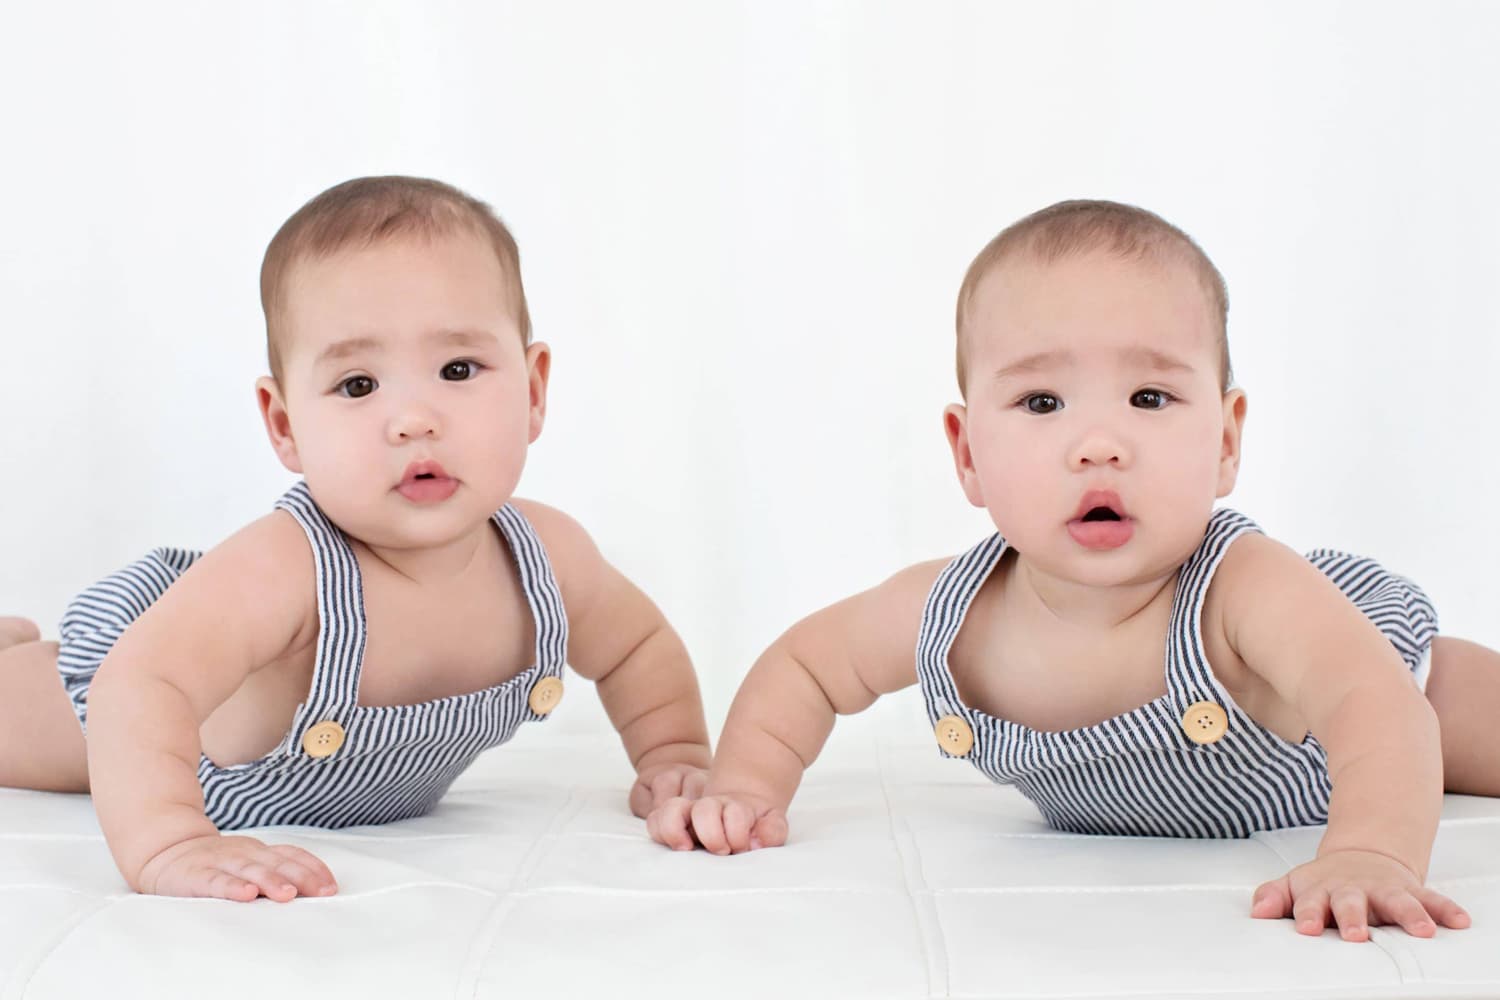 Two newborn babies in matching onesies.